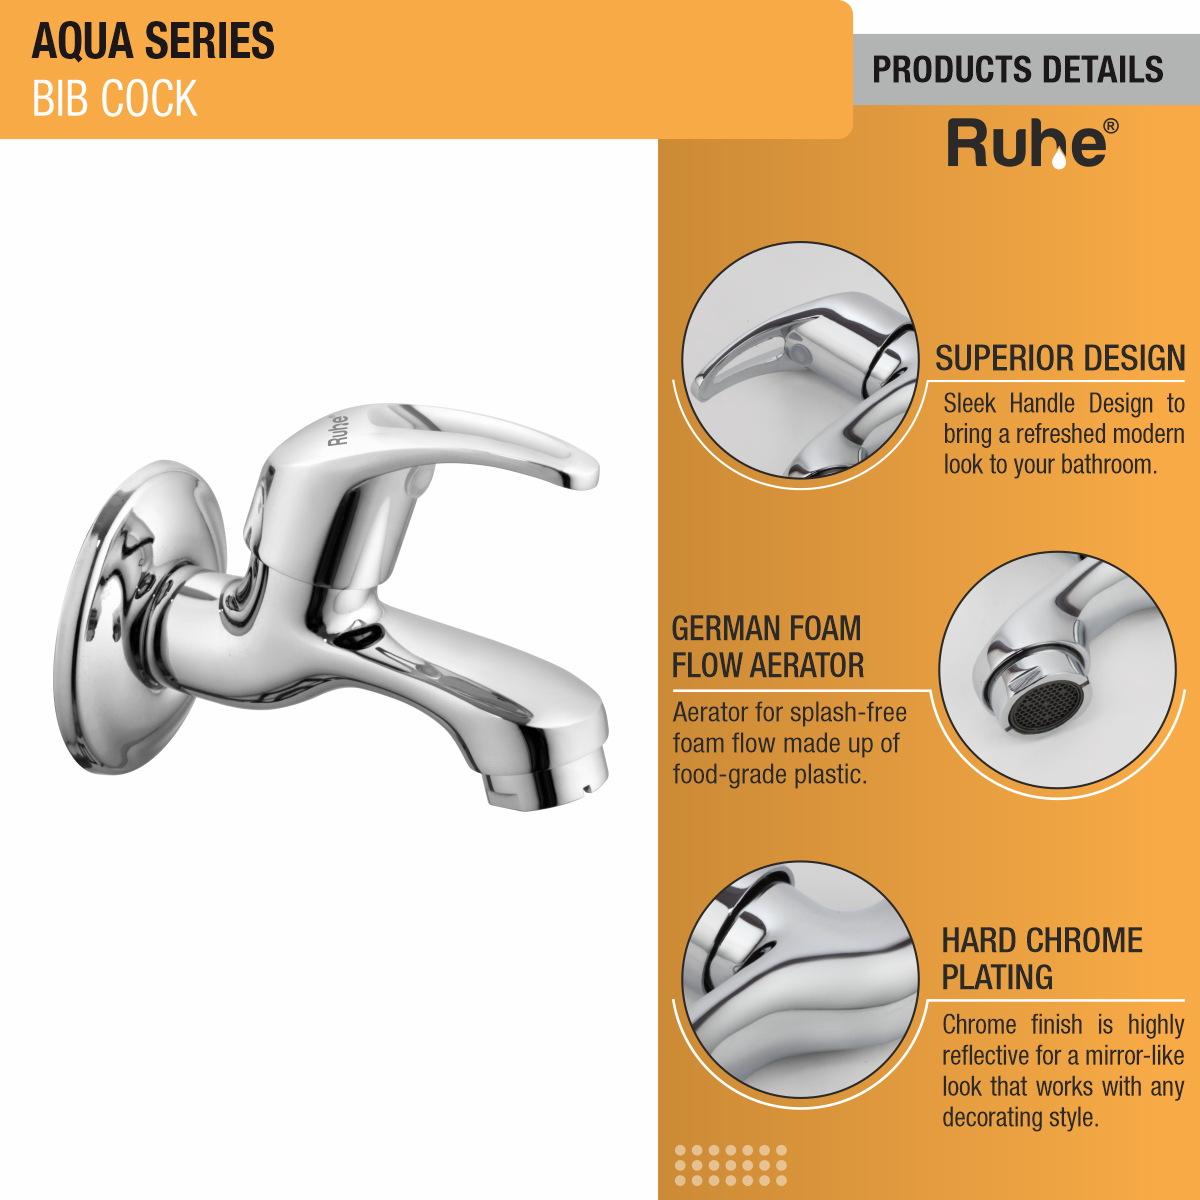 Aqua Bib Tap Brass Faucet product details